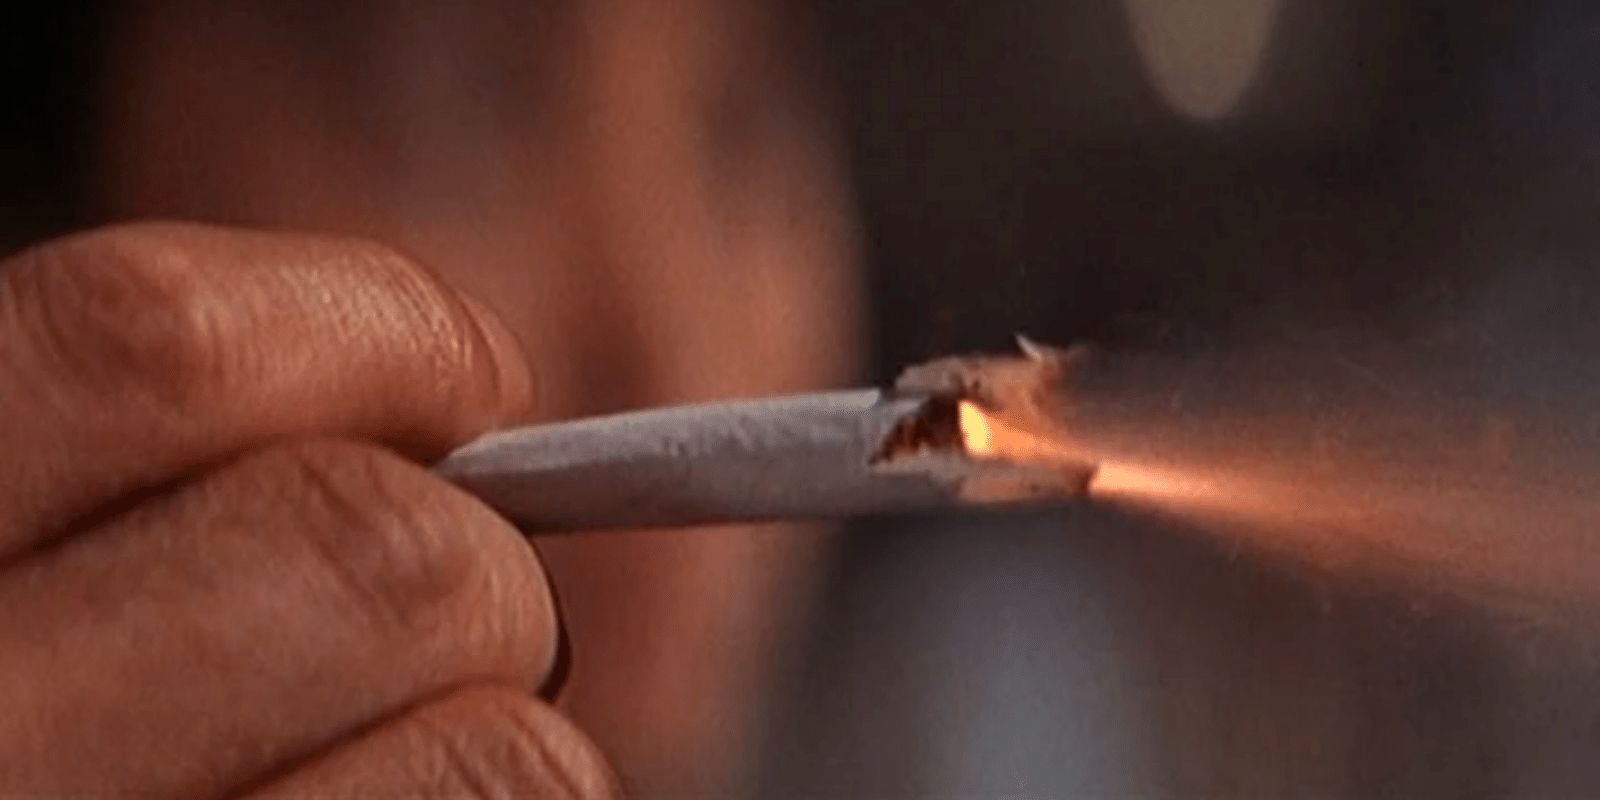 James Bond fires a rocket launcher disguised as a cigarette. 